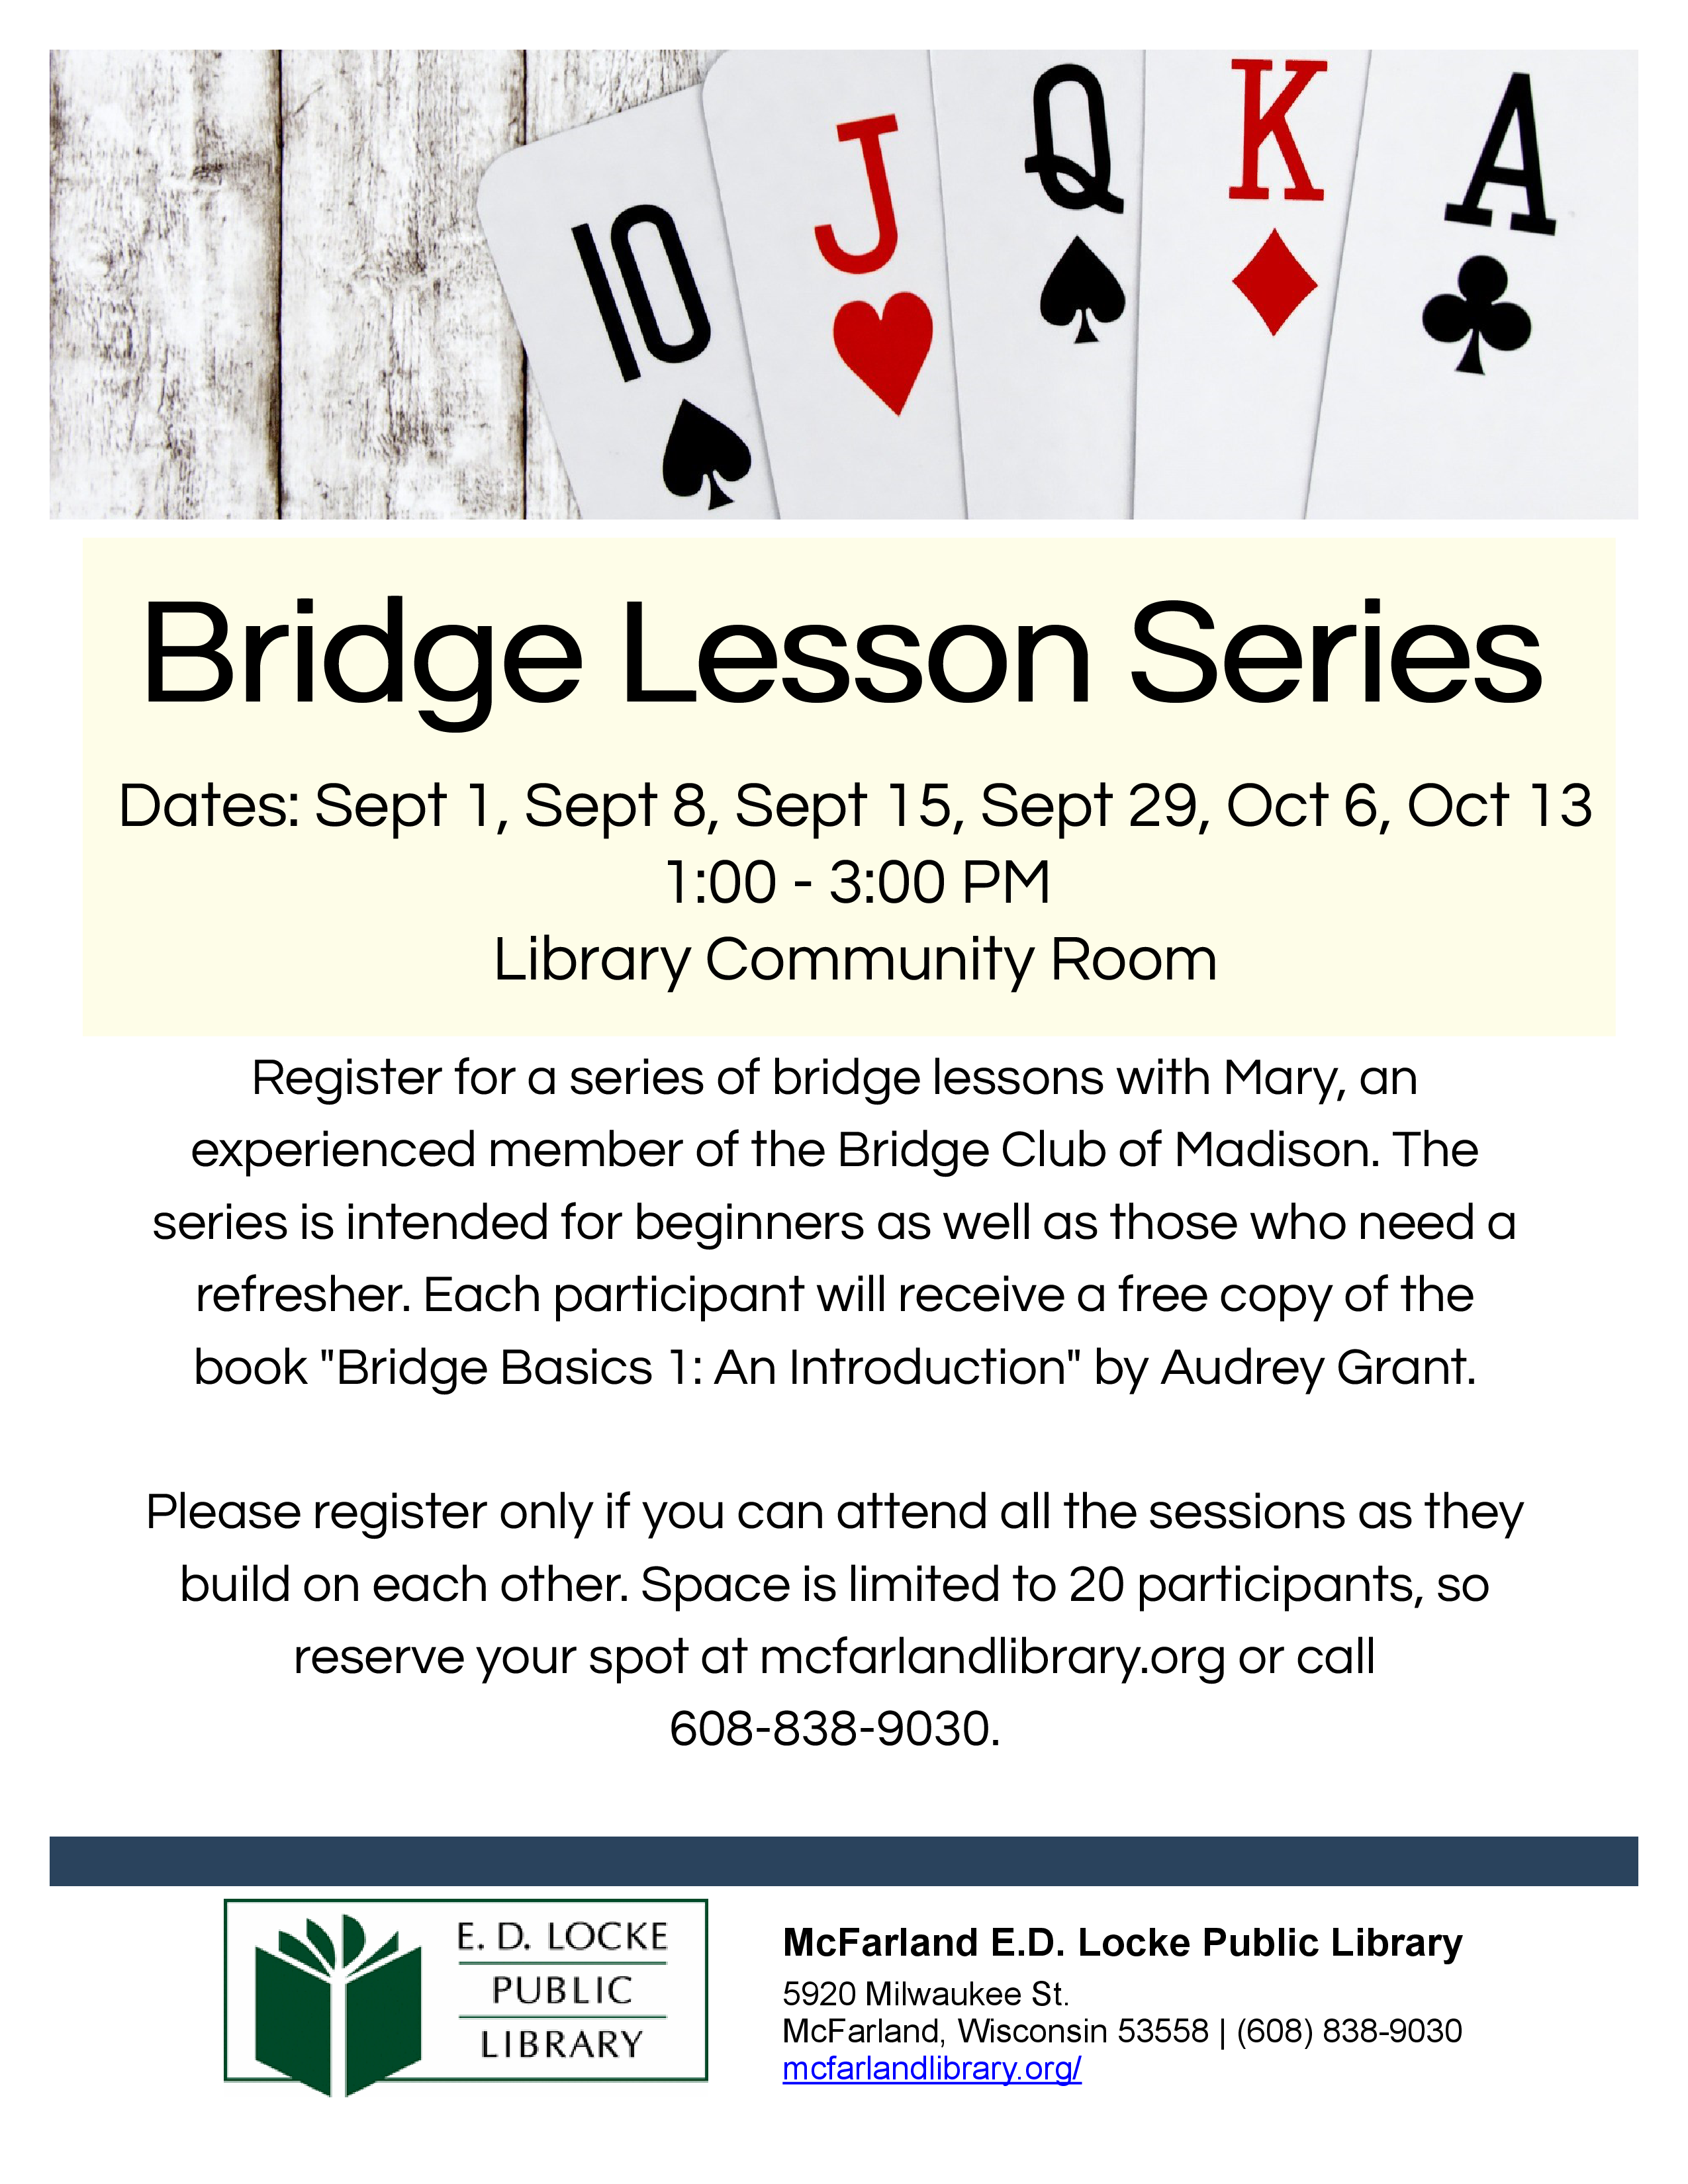 Bridge Lesson Series flyer